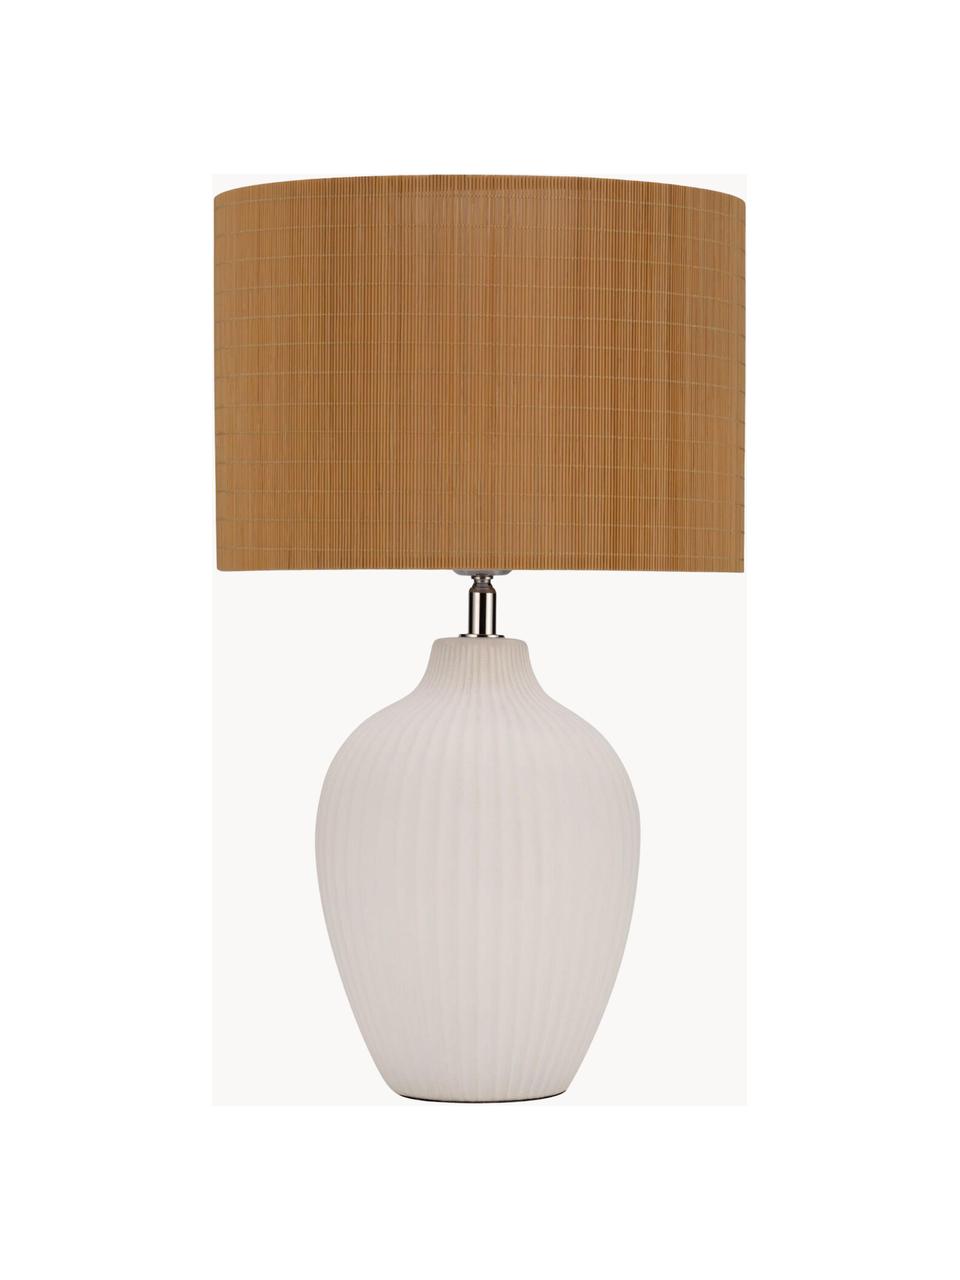 Lampe à poser en bambou Timber Glow, Blanc, brun, Ø 28 x haut. 49 cm